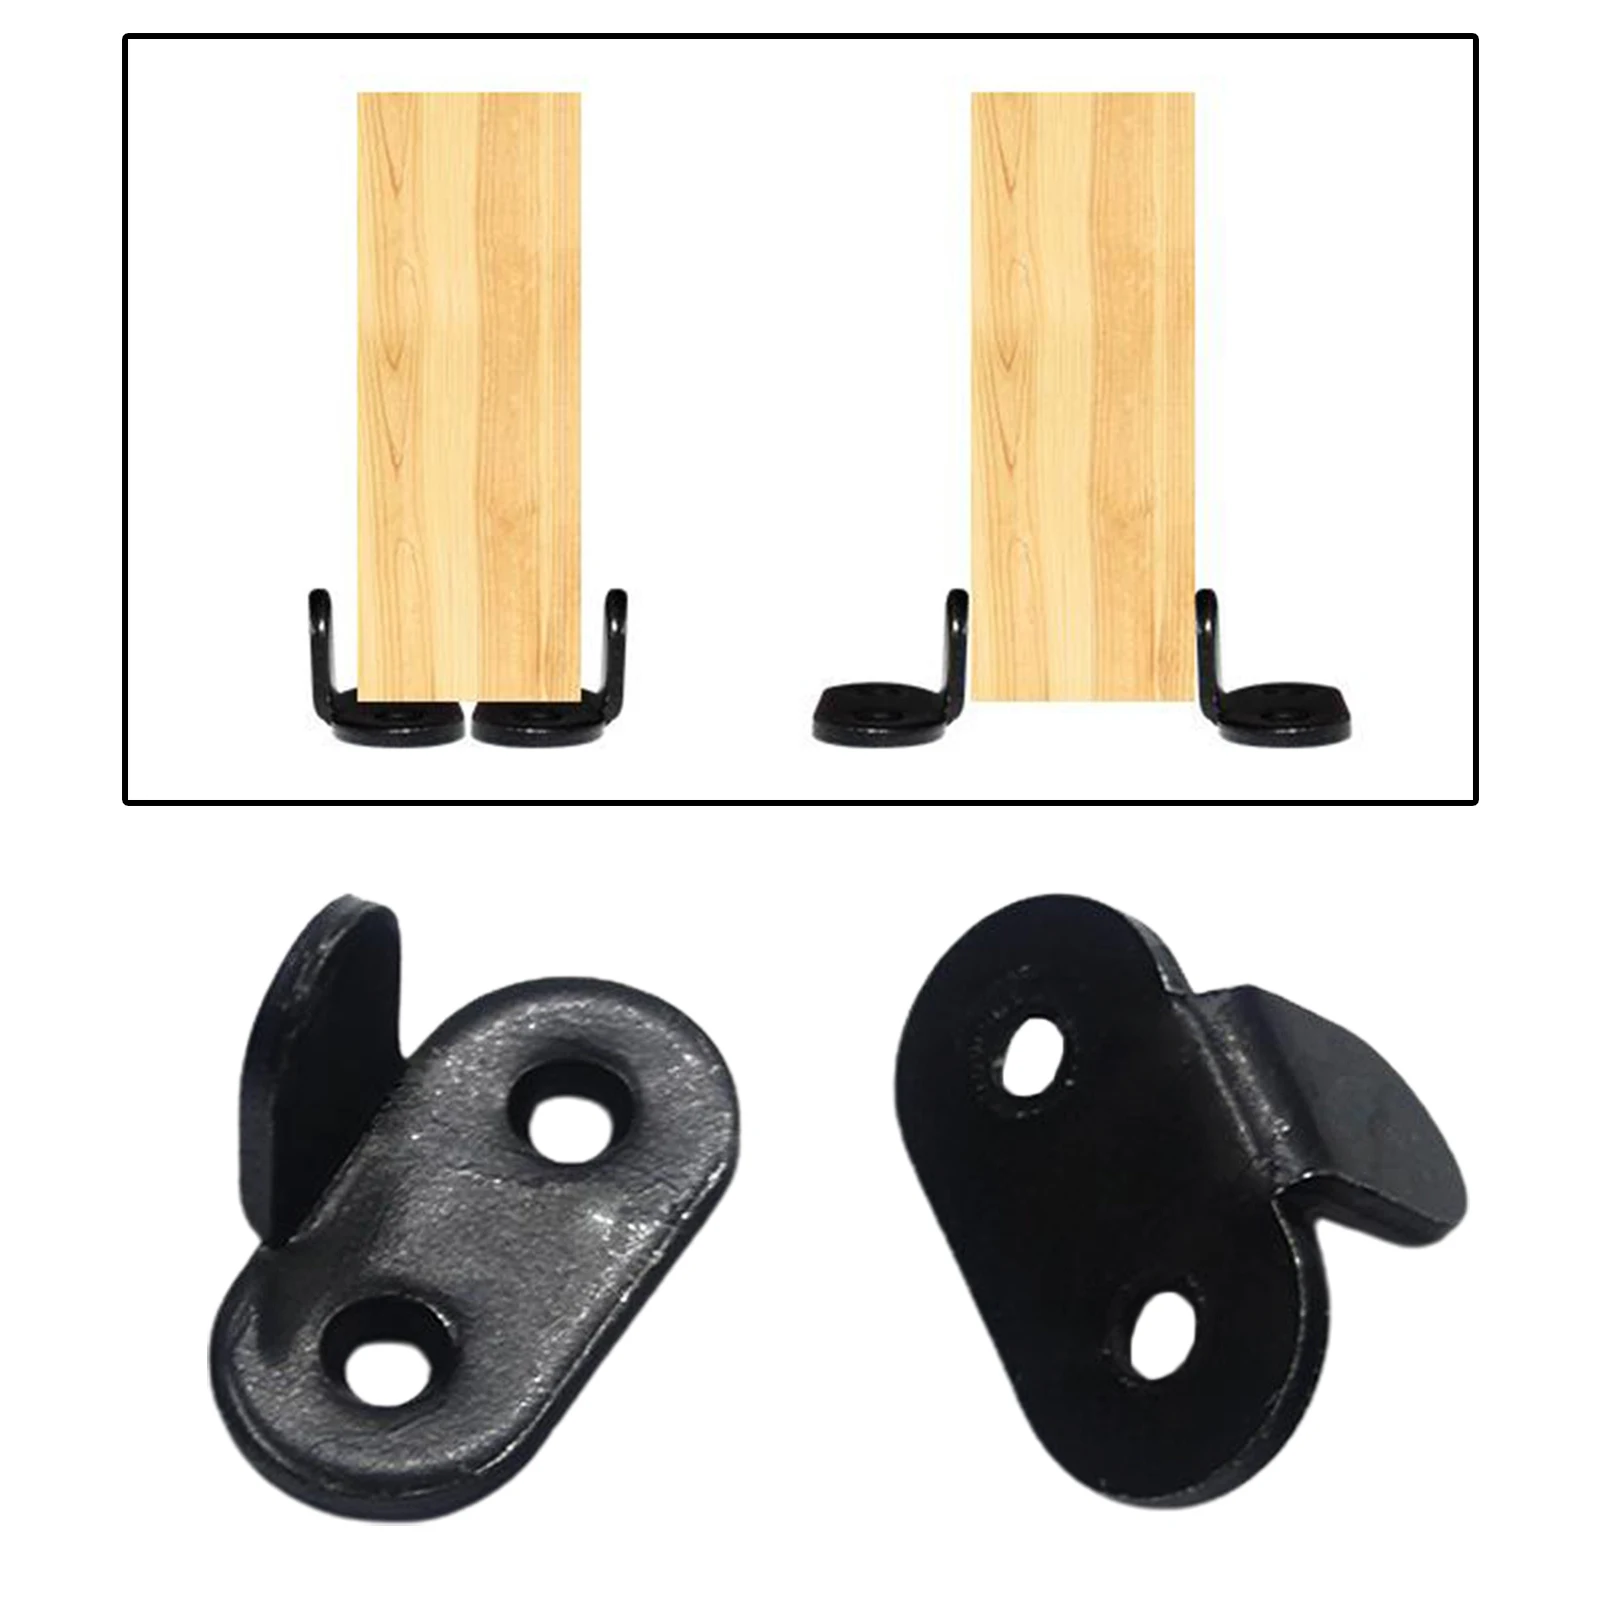 Adjustable Bottom Floor Guide Clip For Sliding Barn Door Hardware Black Smooth 